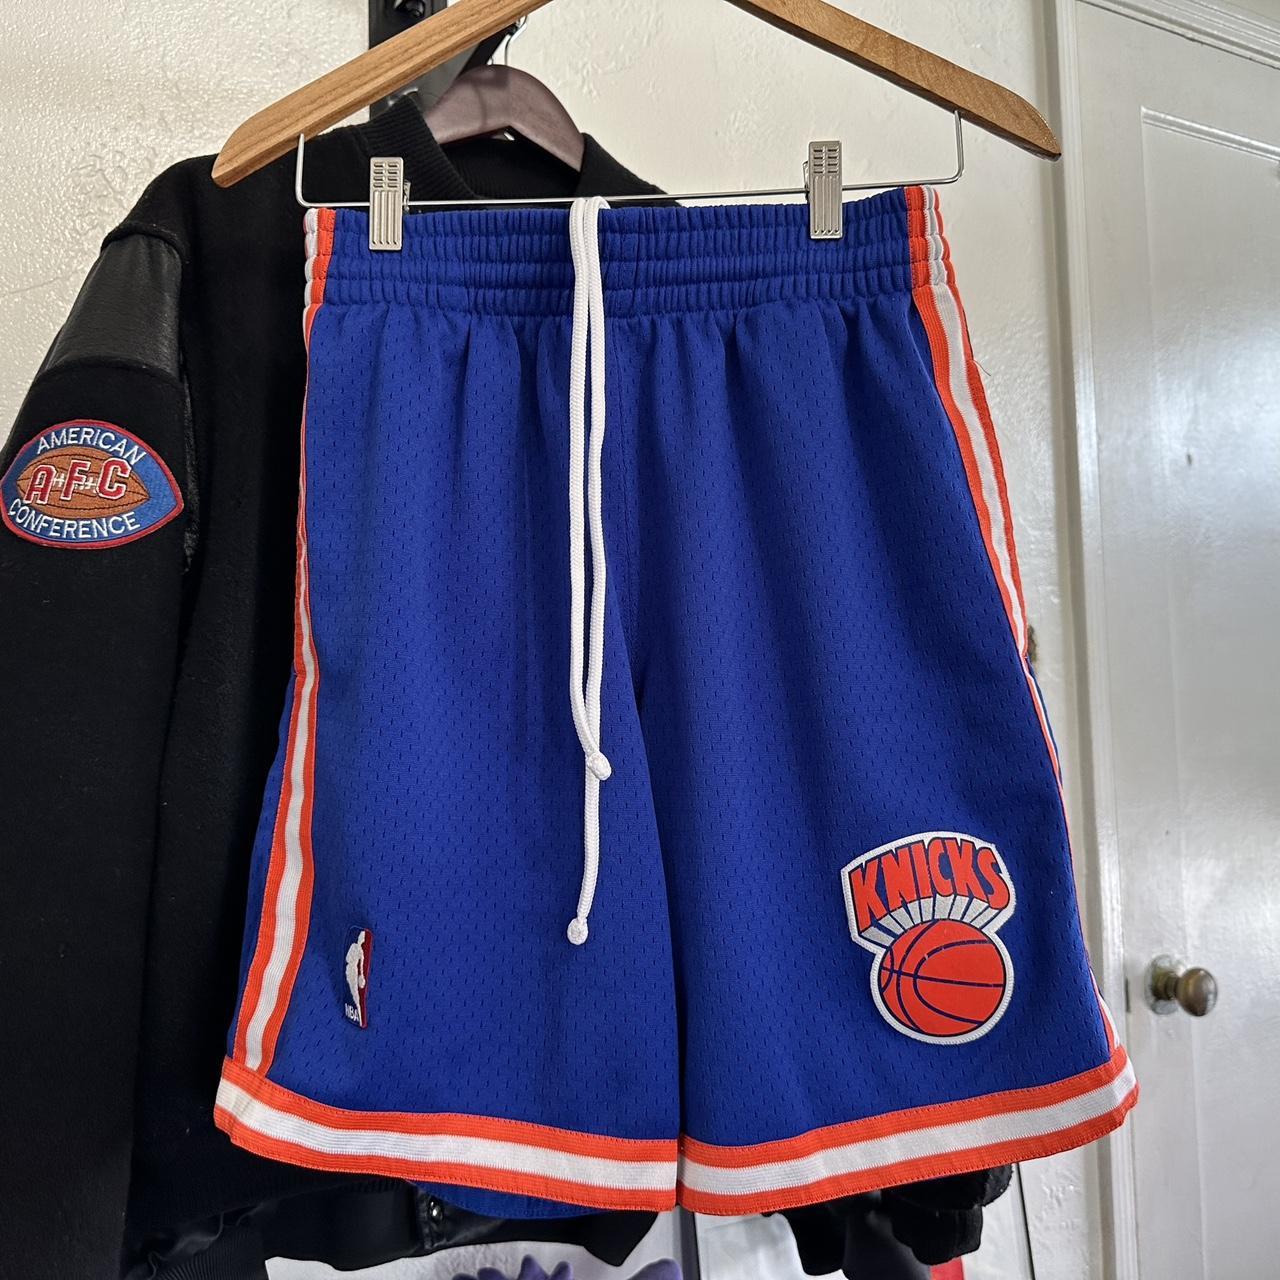 Men's Mitchell & Ness New York Knicks NBA 1991-92 Away Swingman Basketball  Shorts